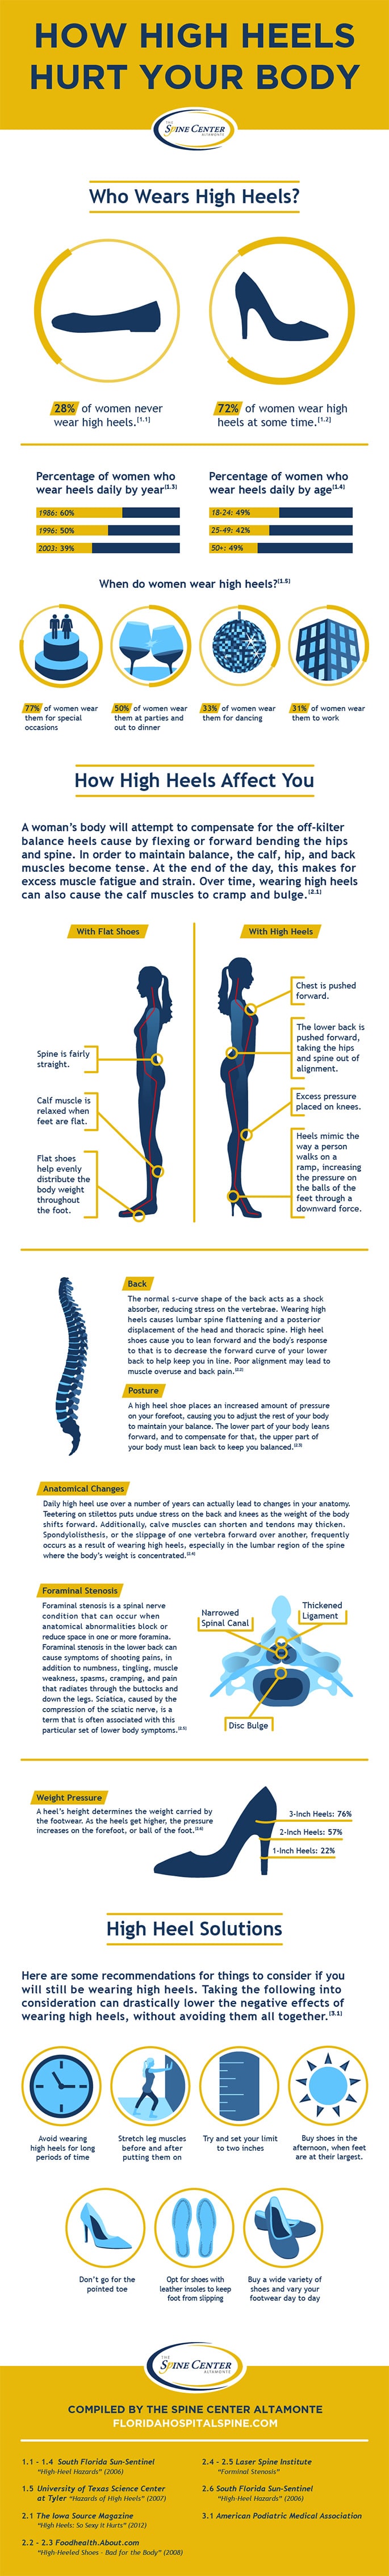 How High Heels Hurt Your Body [Infographic]